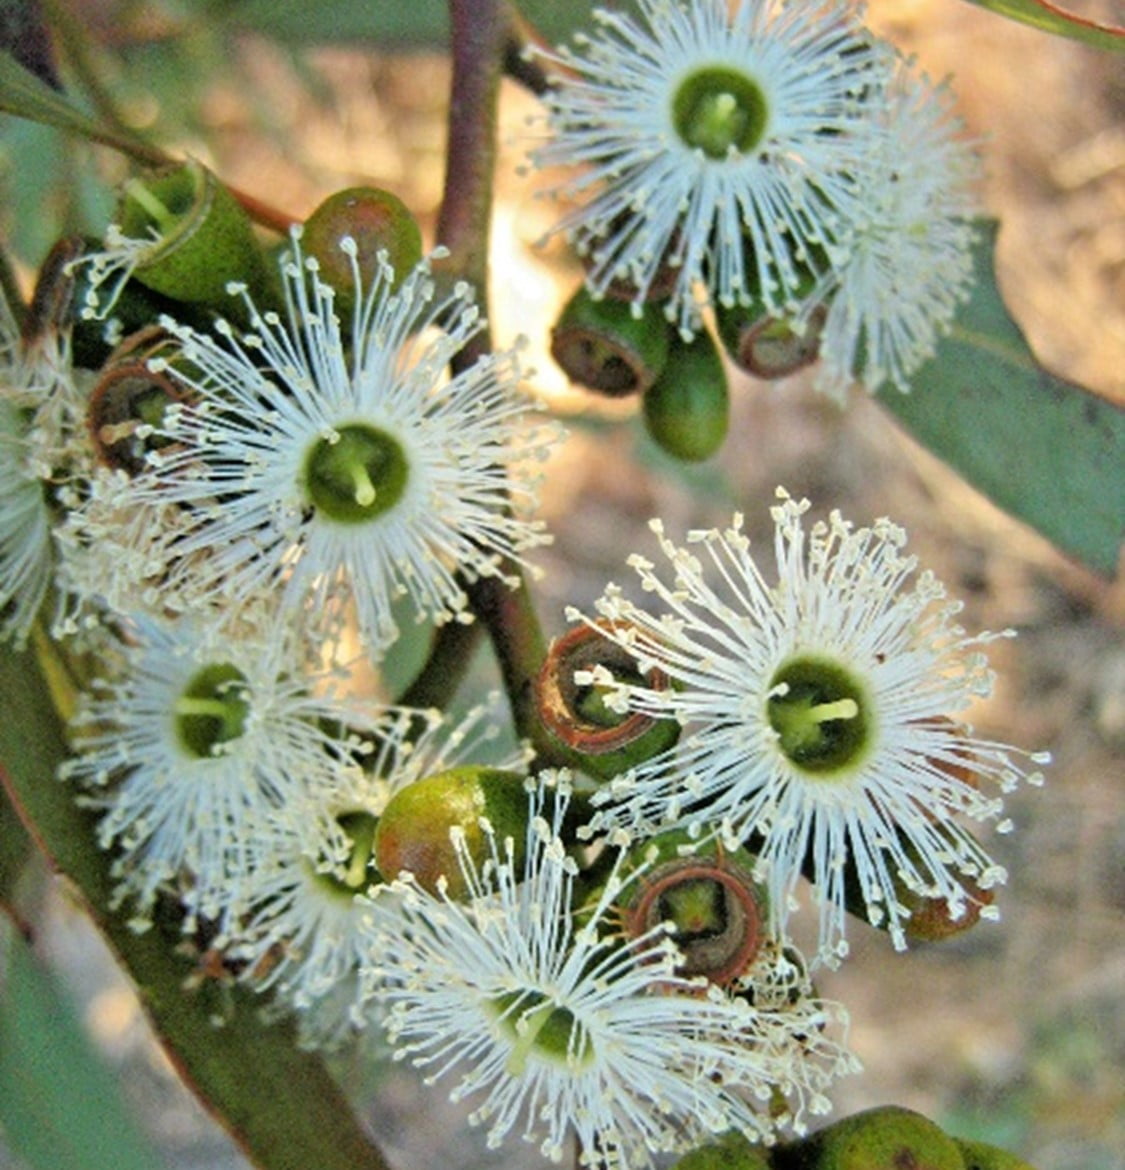 Eucalyptus Plants to Repel Ticks